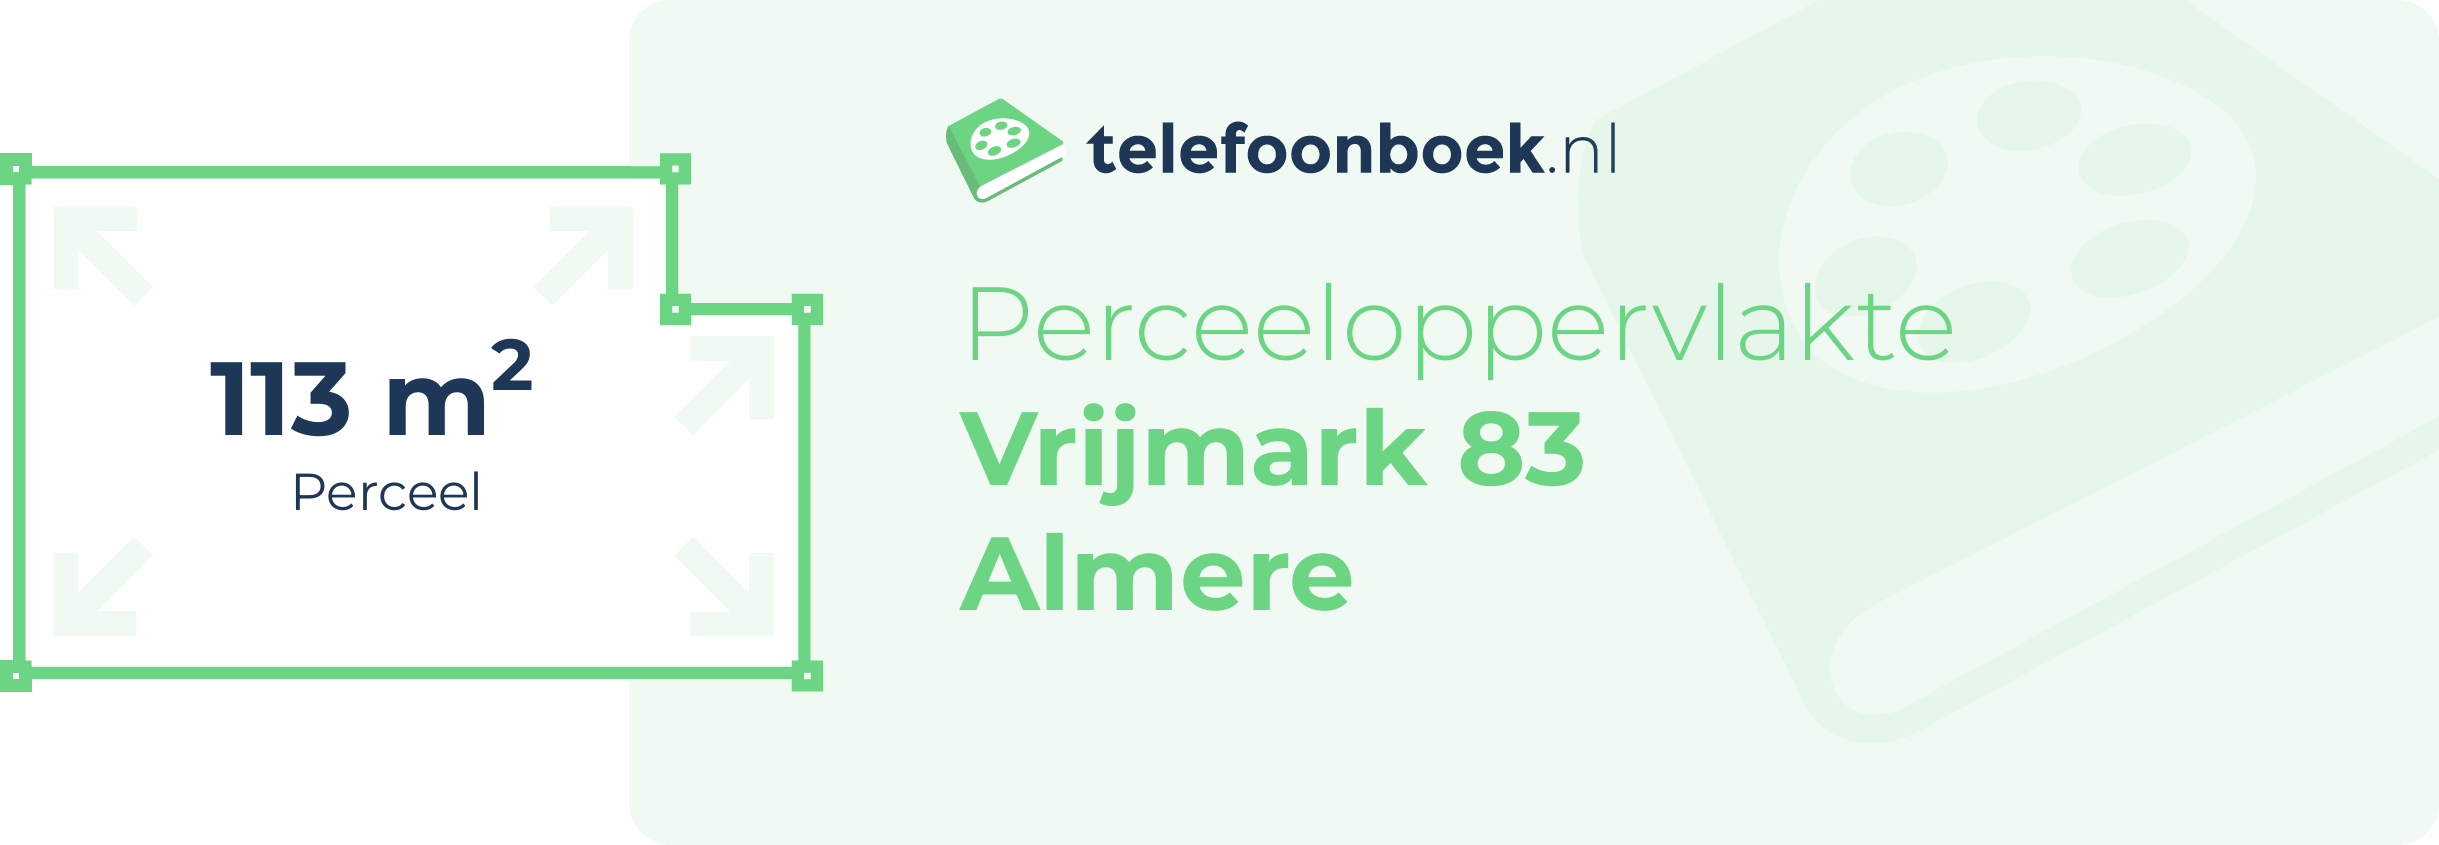 Perceeloppervlakte Vrijmark 83 Almere